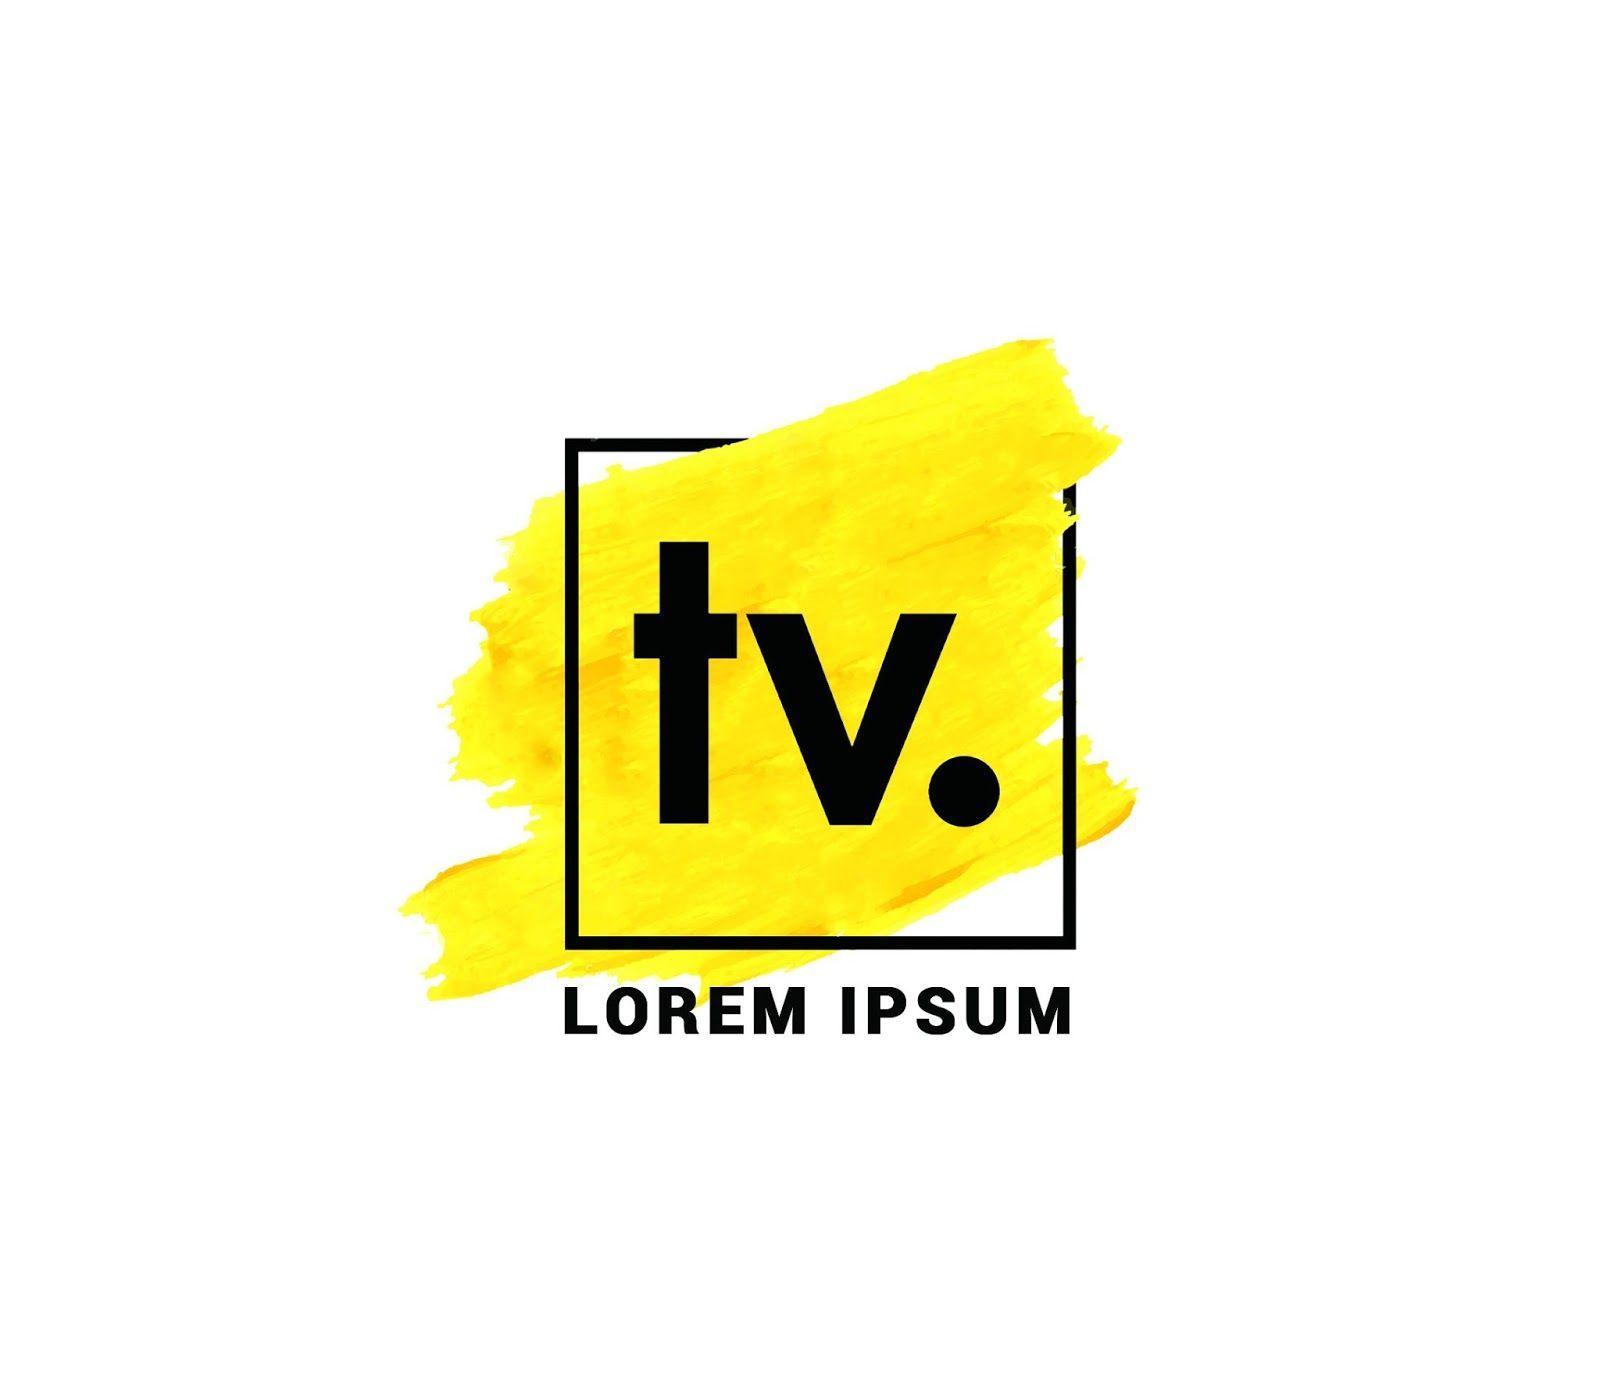 TV Channel Logo - TV Channel Logo Design For Inspiration Download Free PSD | visiting ...